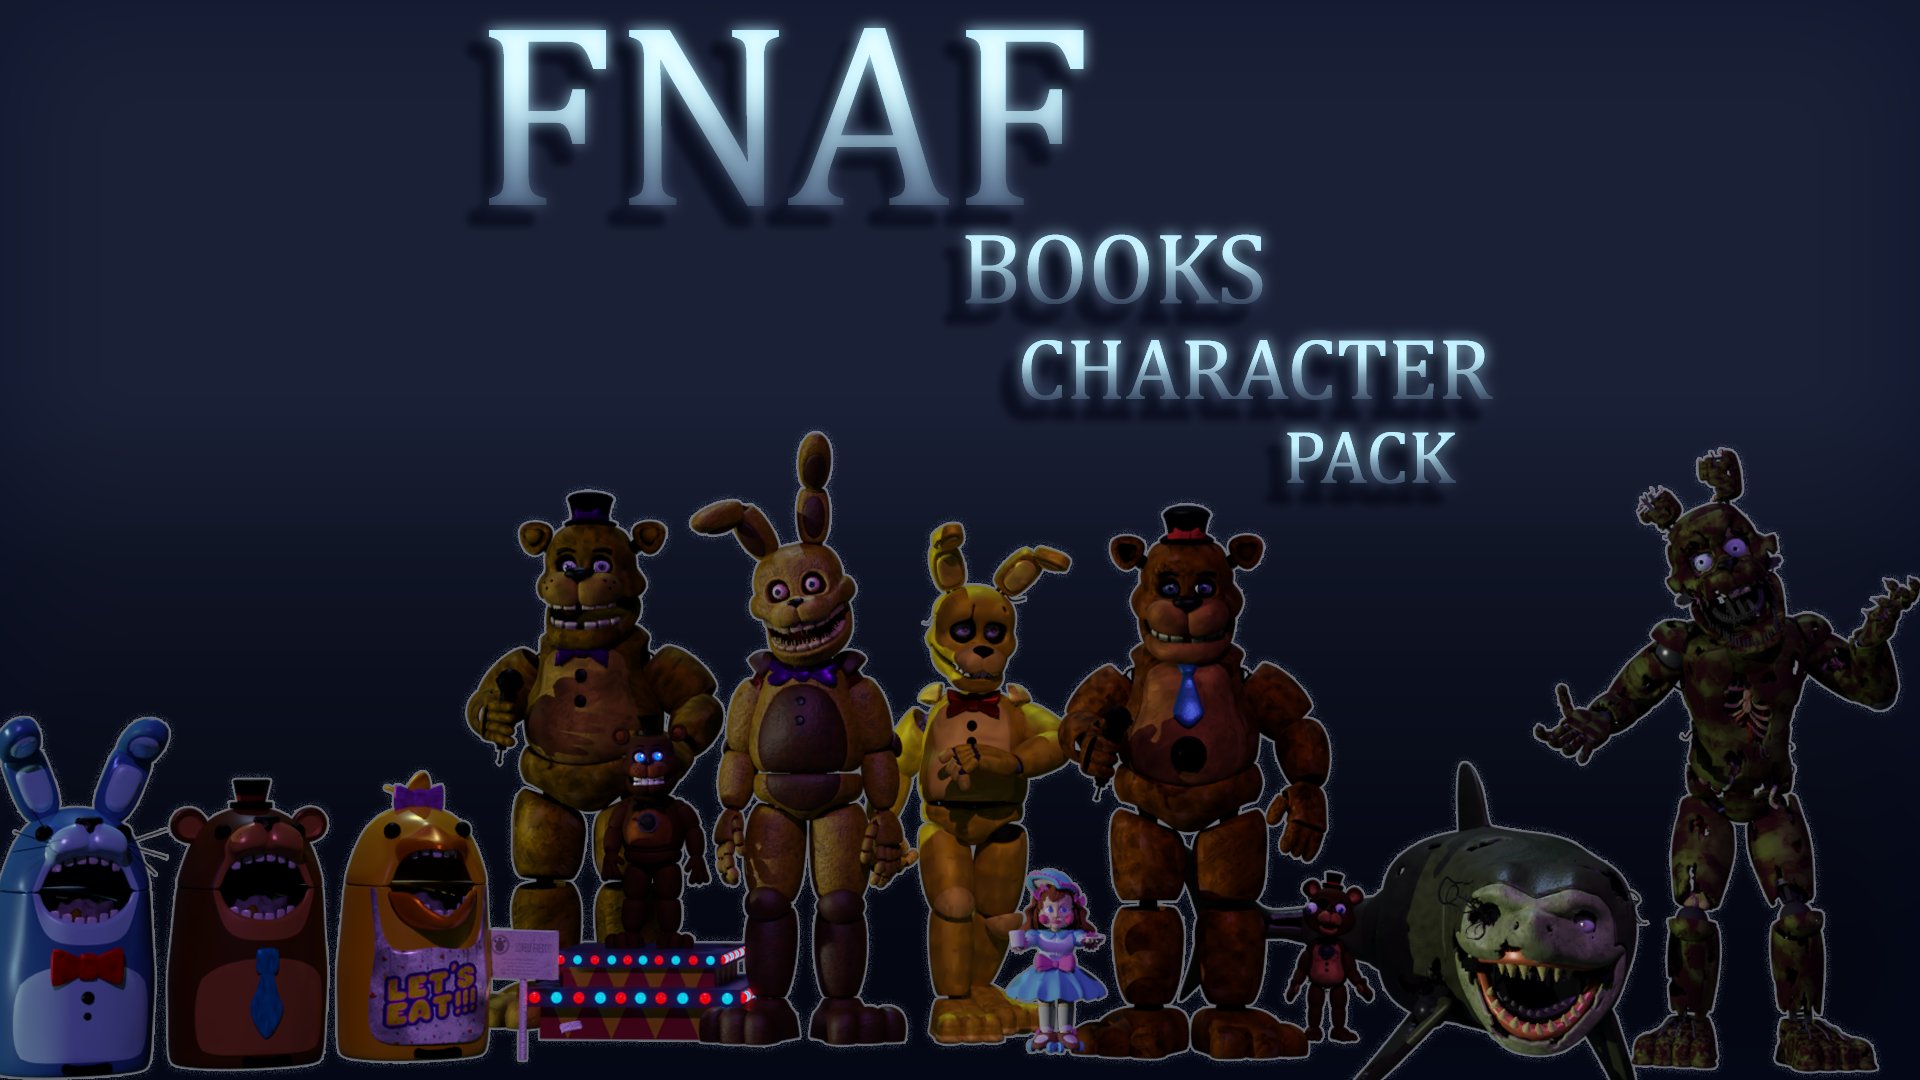 FNAF book characters